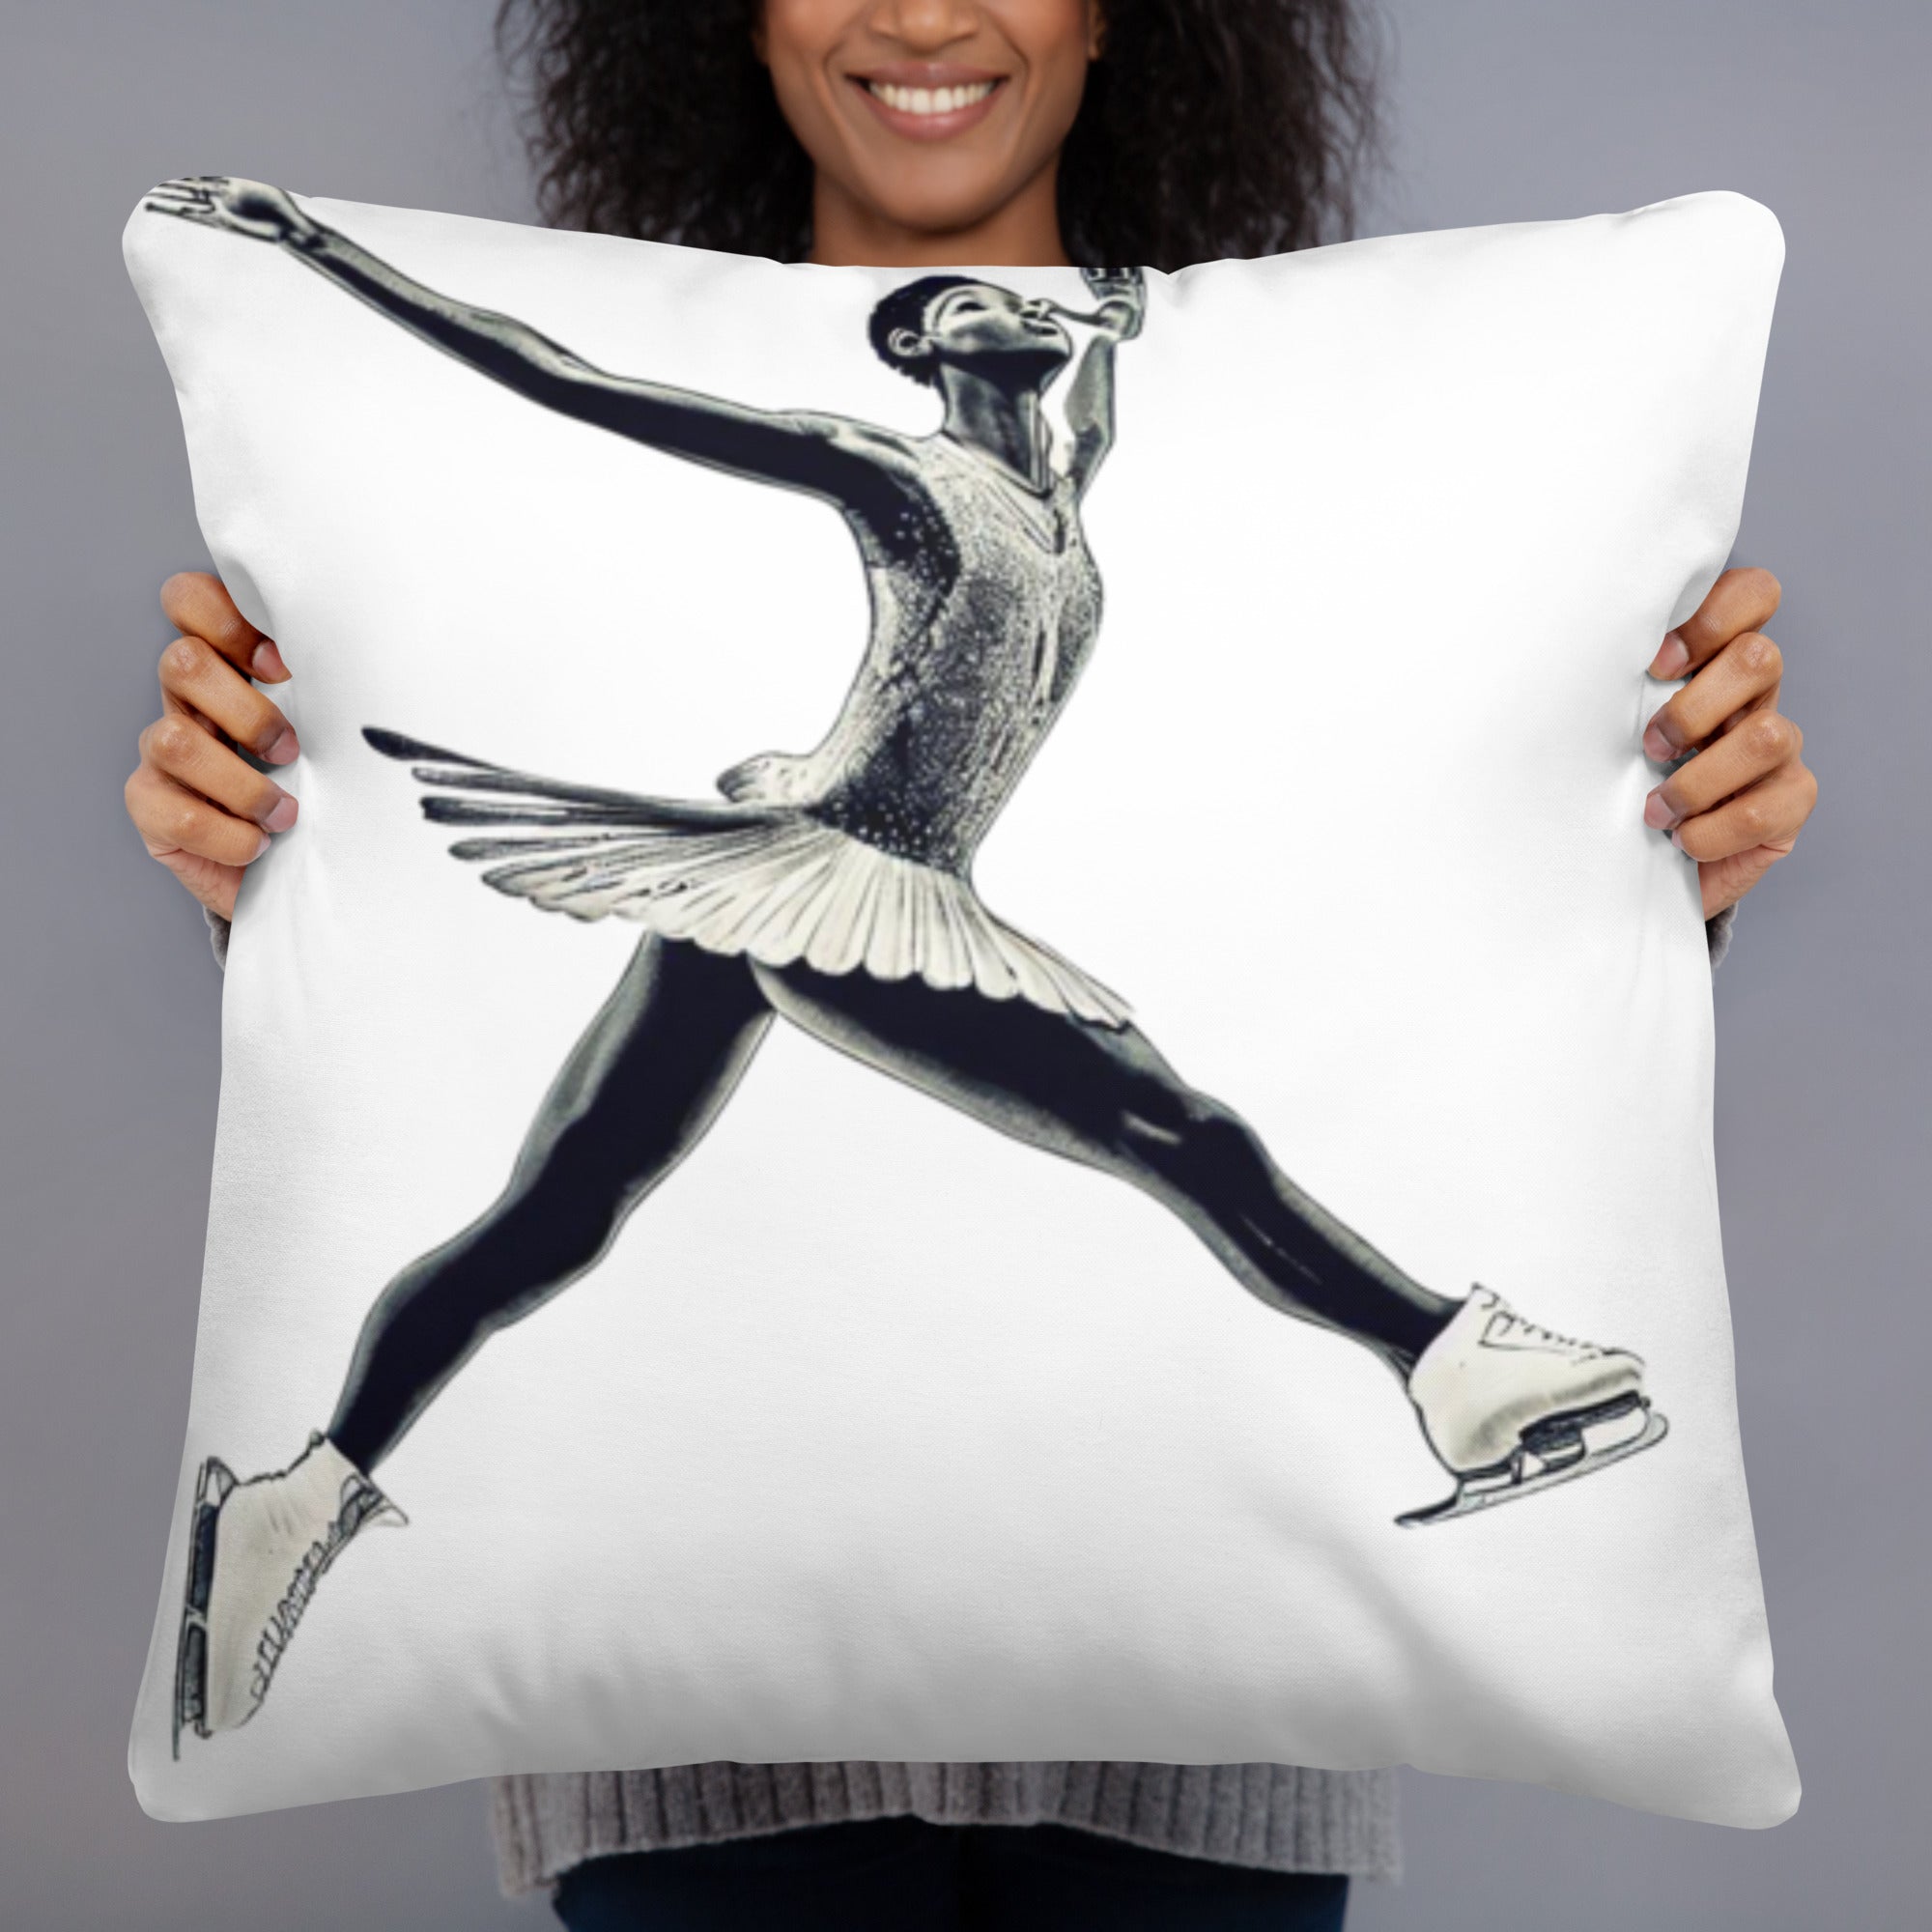 Figure skating pillow.